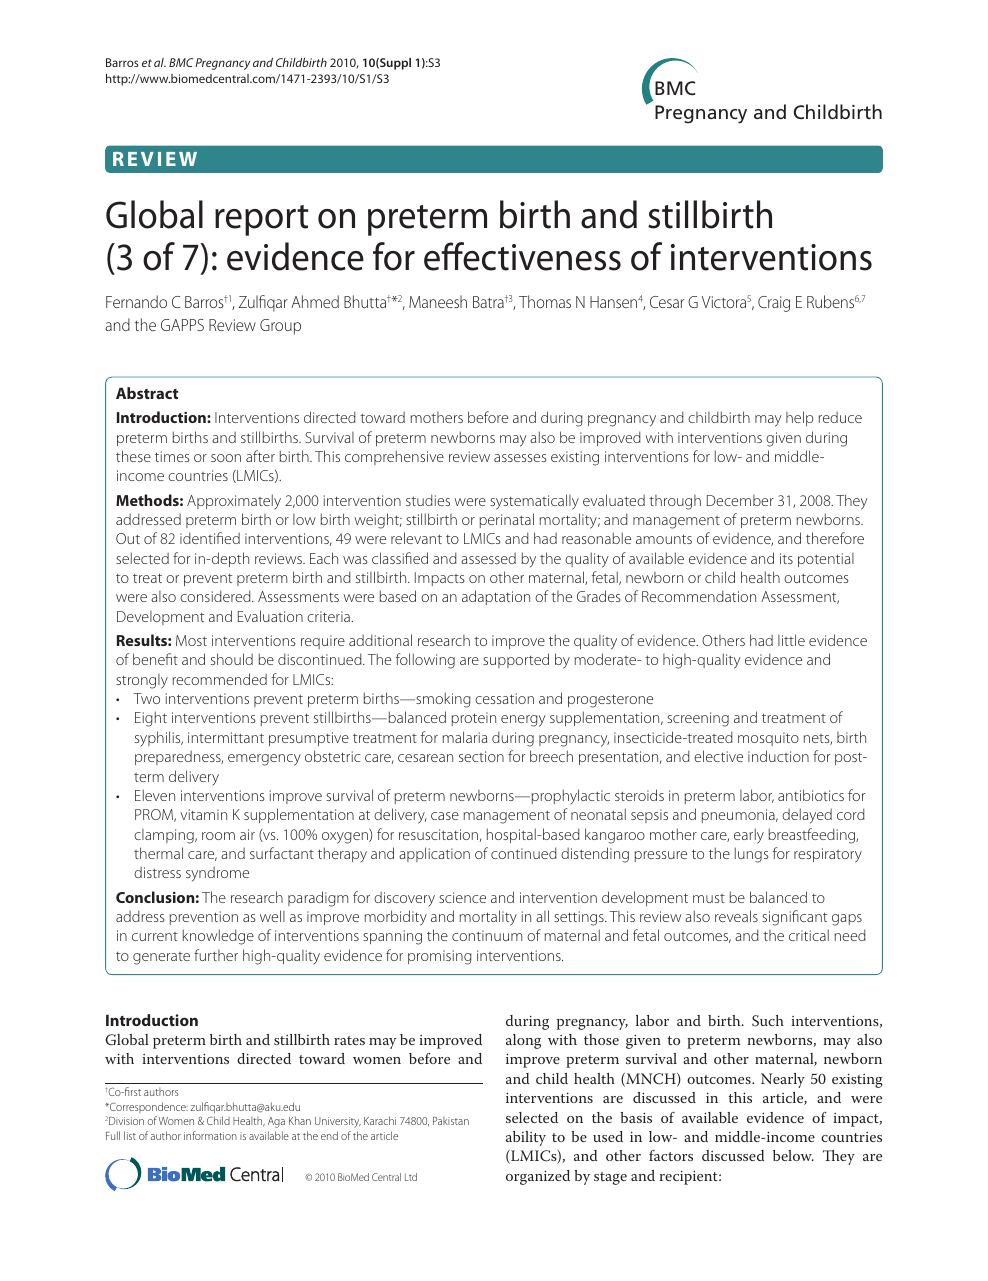 Global Report On Preterm Birth And Stillbirth 3 Of 7 Evidence